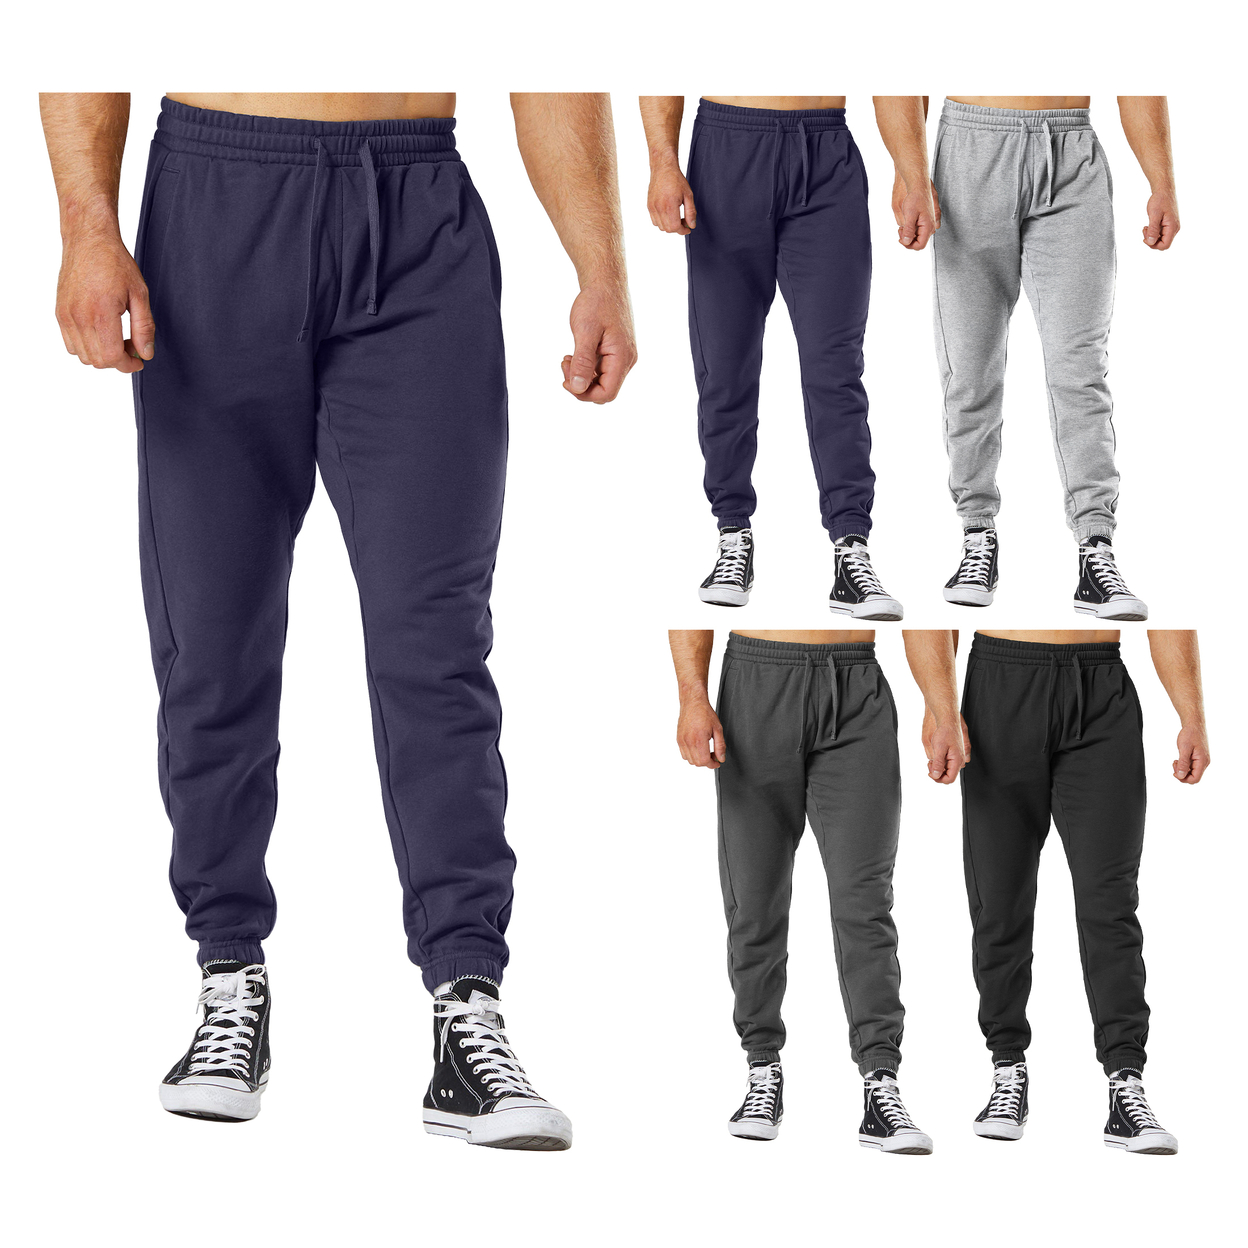 Men's Ultra-Soft Cozy Winter Warm Casual Fleece Lined Sweatpants Jogger - Black, X-large